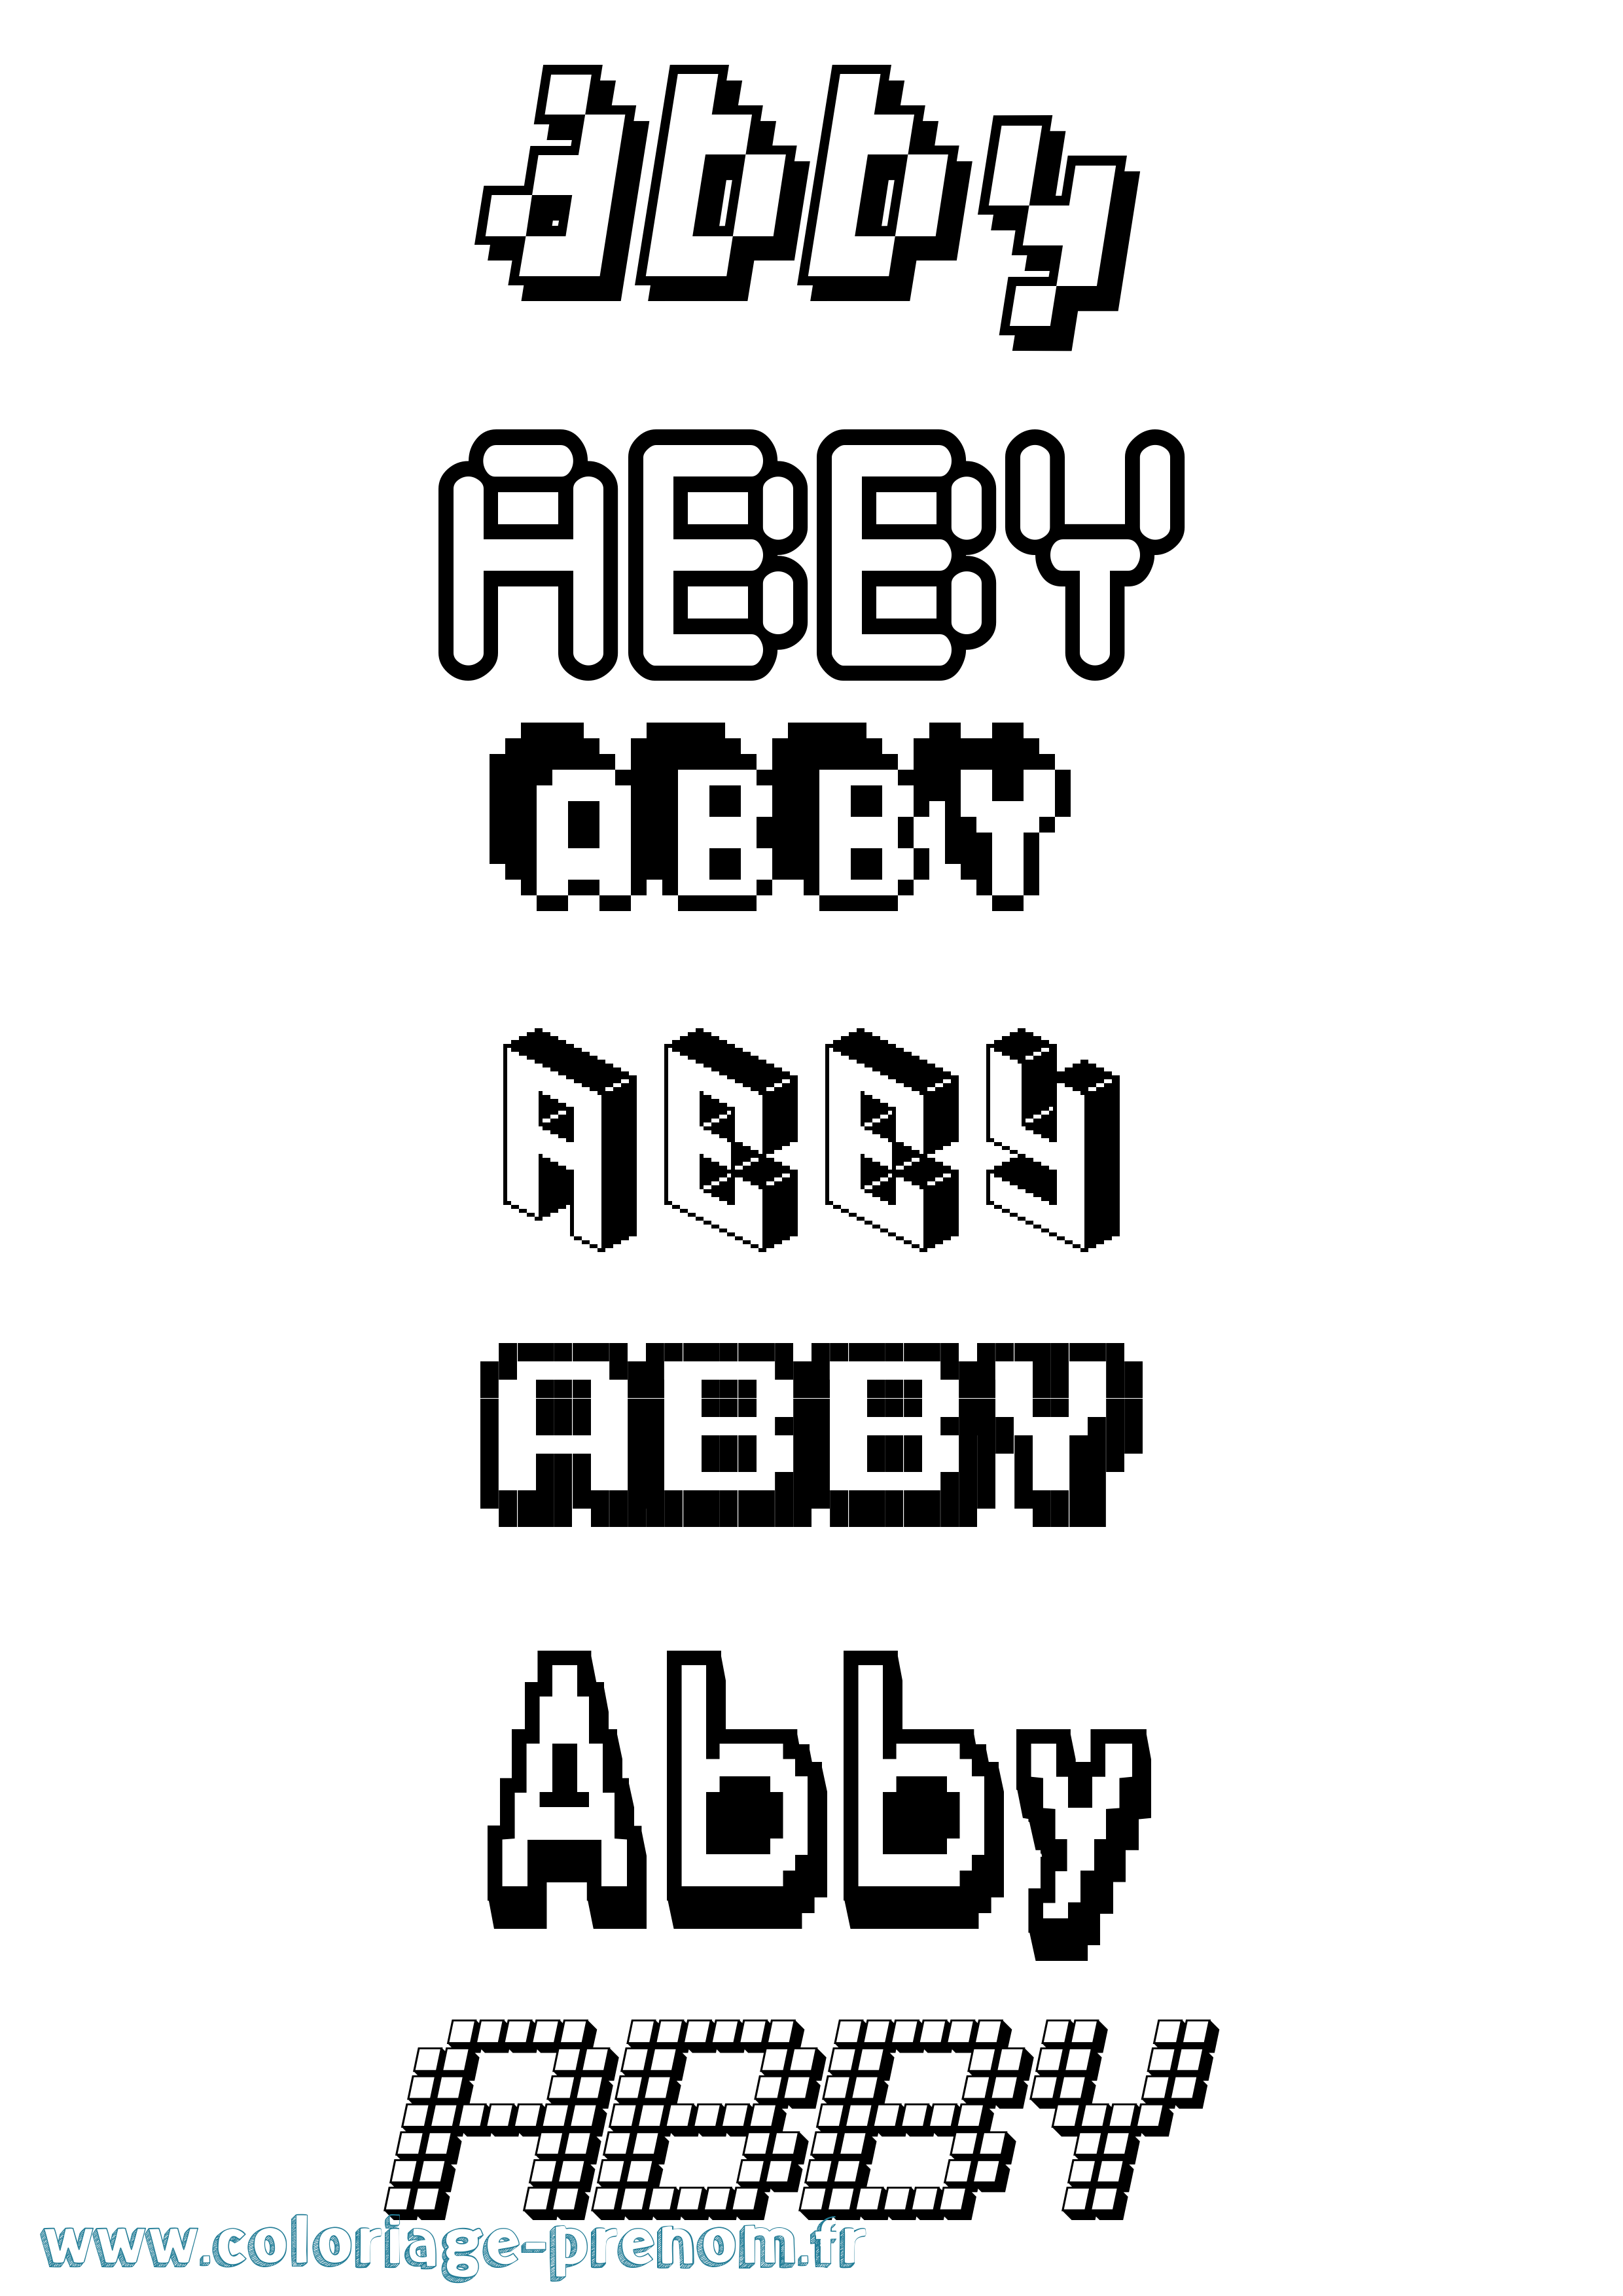 Coloriage prénom Abby Pixel